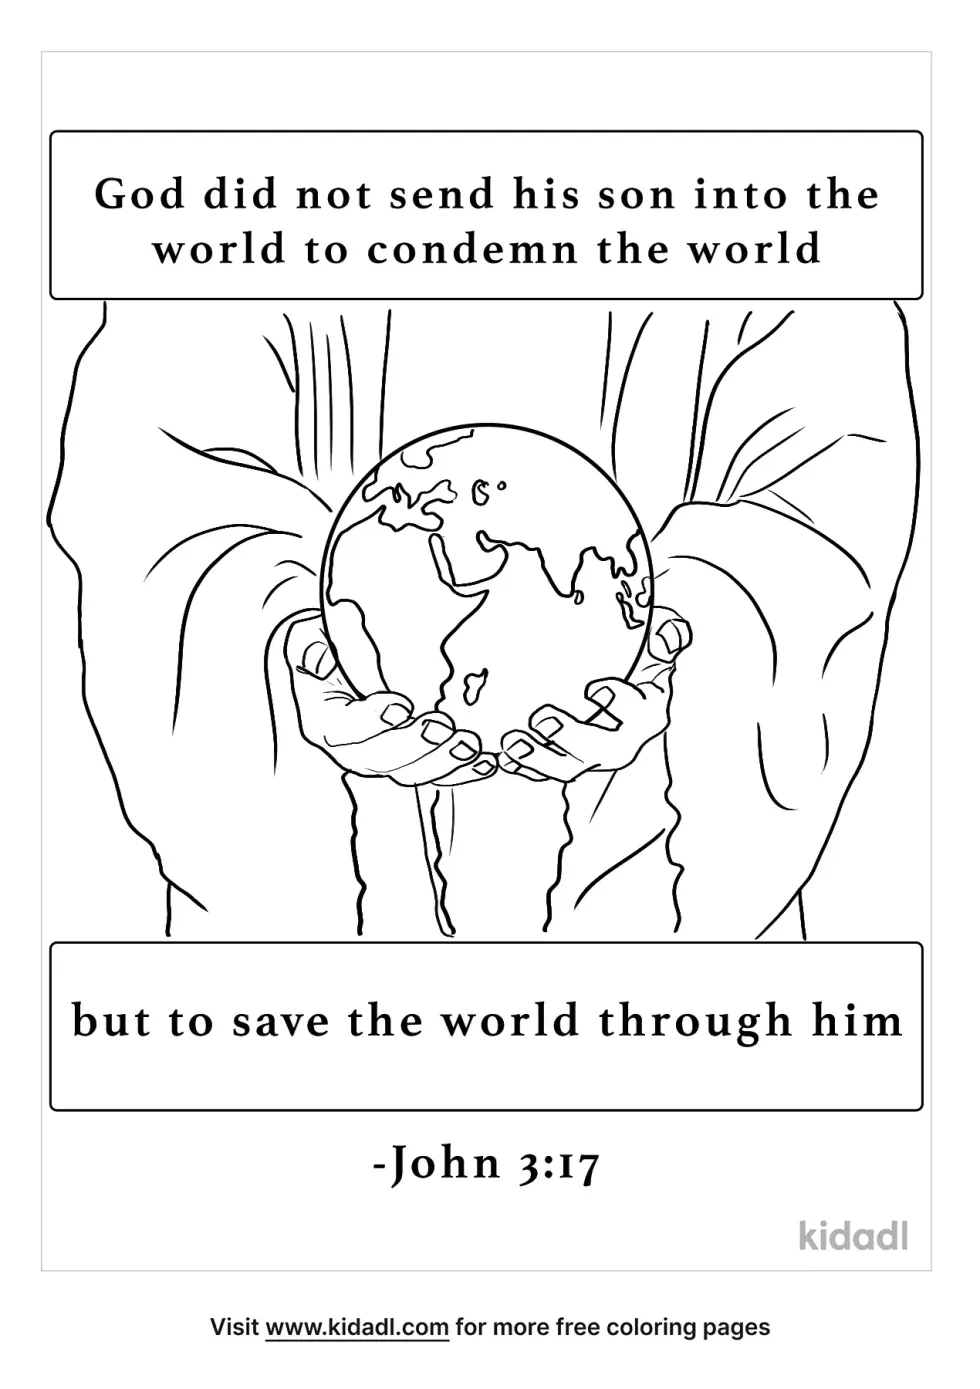 John 3:17 Coloring Page